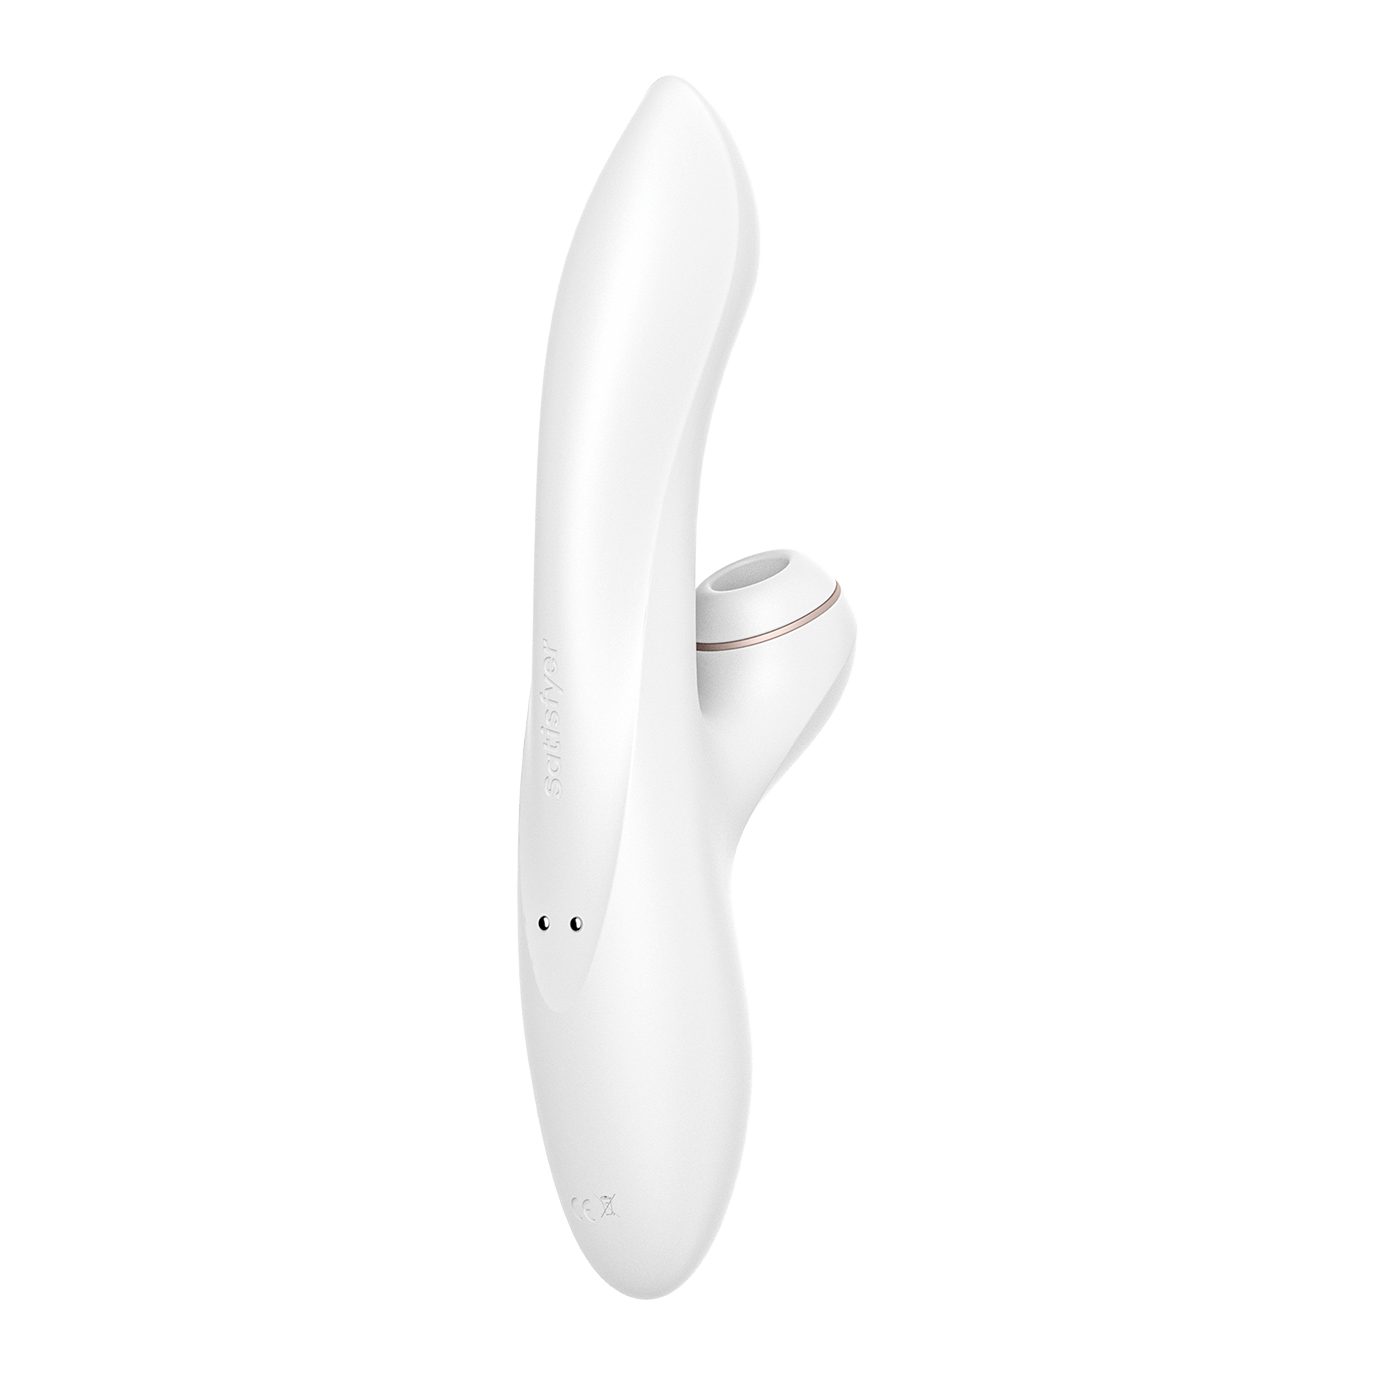 (1-tlg) Satisfyer Klitoris/G-Punkt-Vibrator, Satisfyer G-Spot", Klitoris-Stimulator "Pro+ wasserdicht,